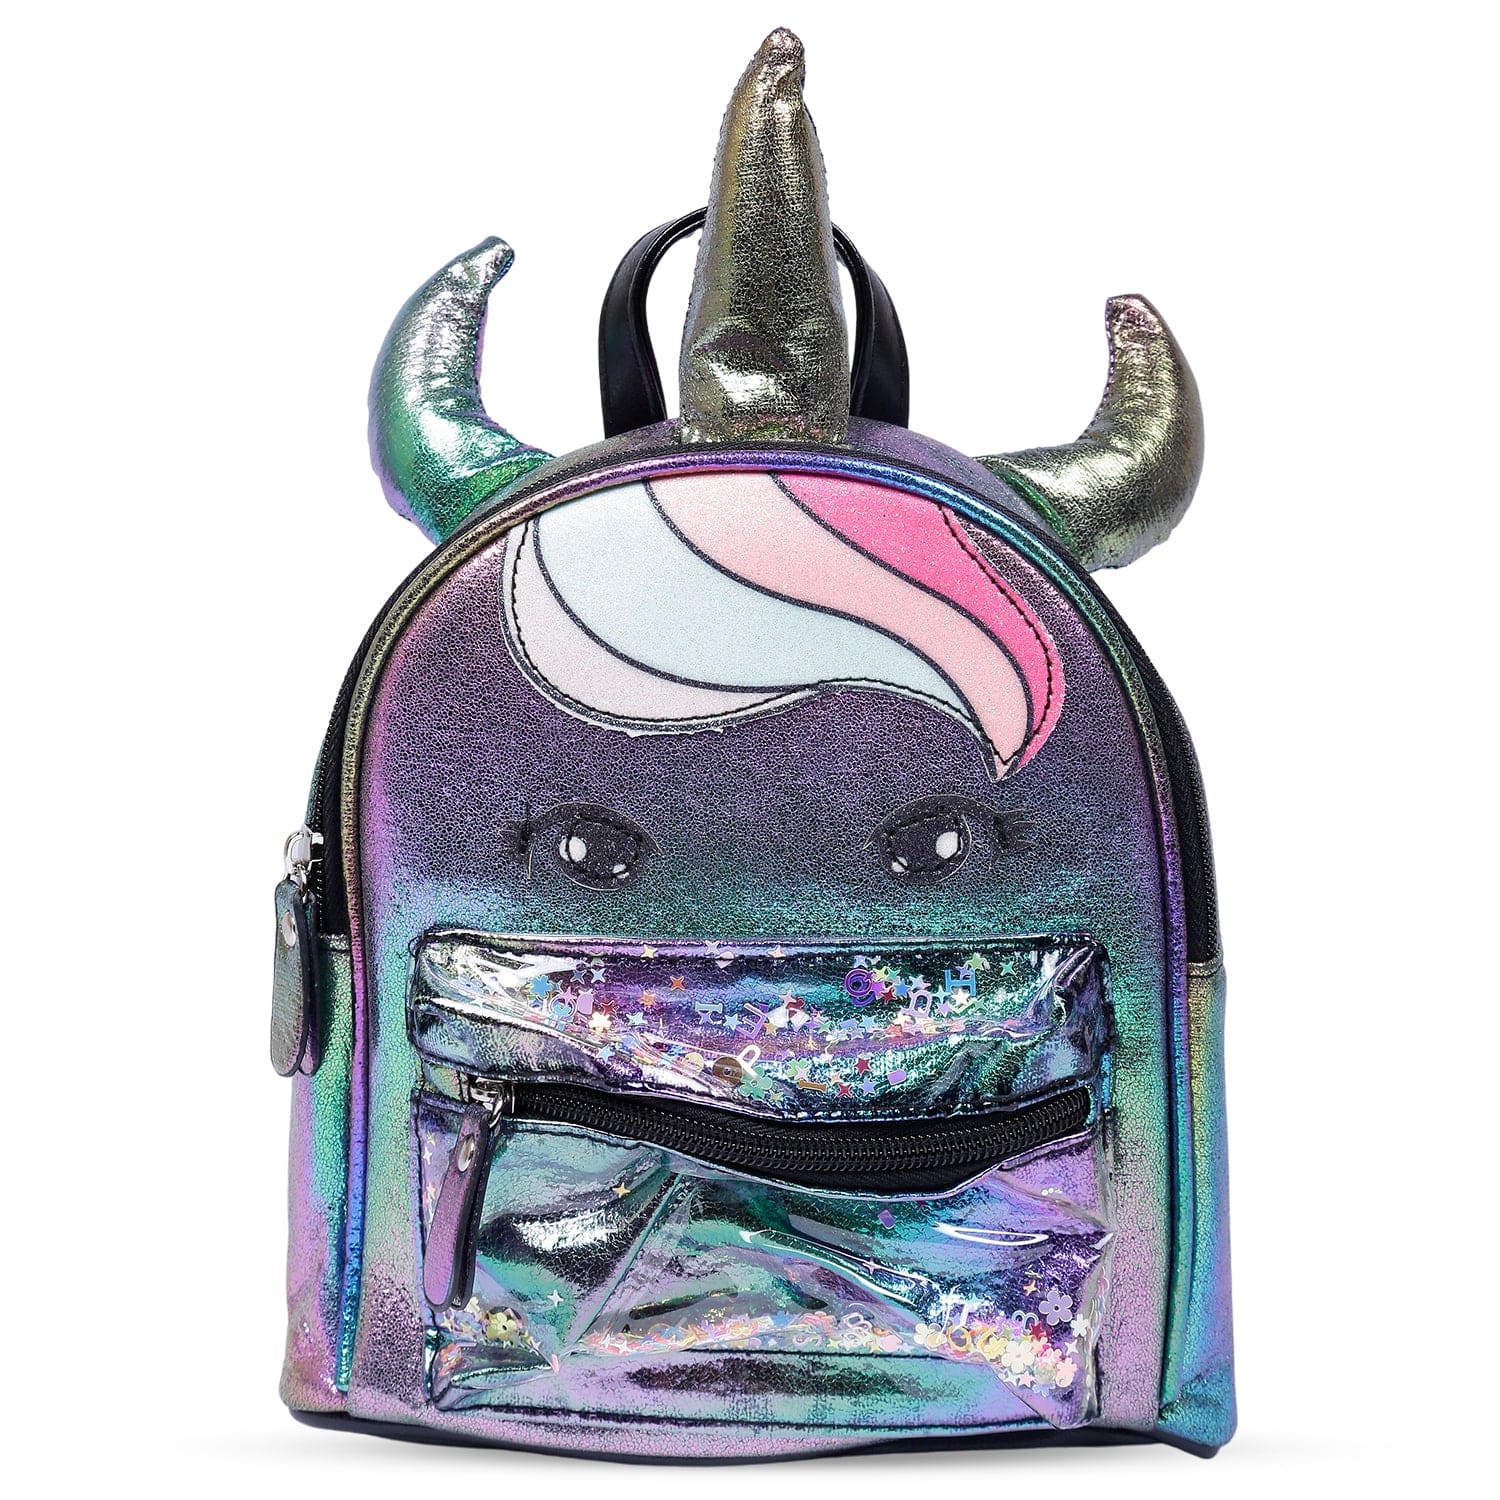 Buy NOVEX 16 Inch Original Unicorn Kids Backpack Trolley Bag with 2 Wheel  (Turquoise, 16